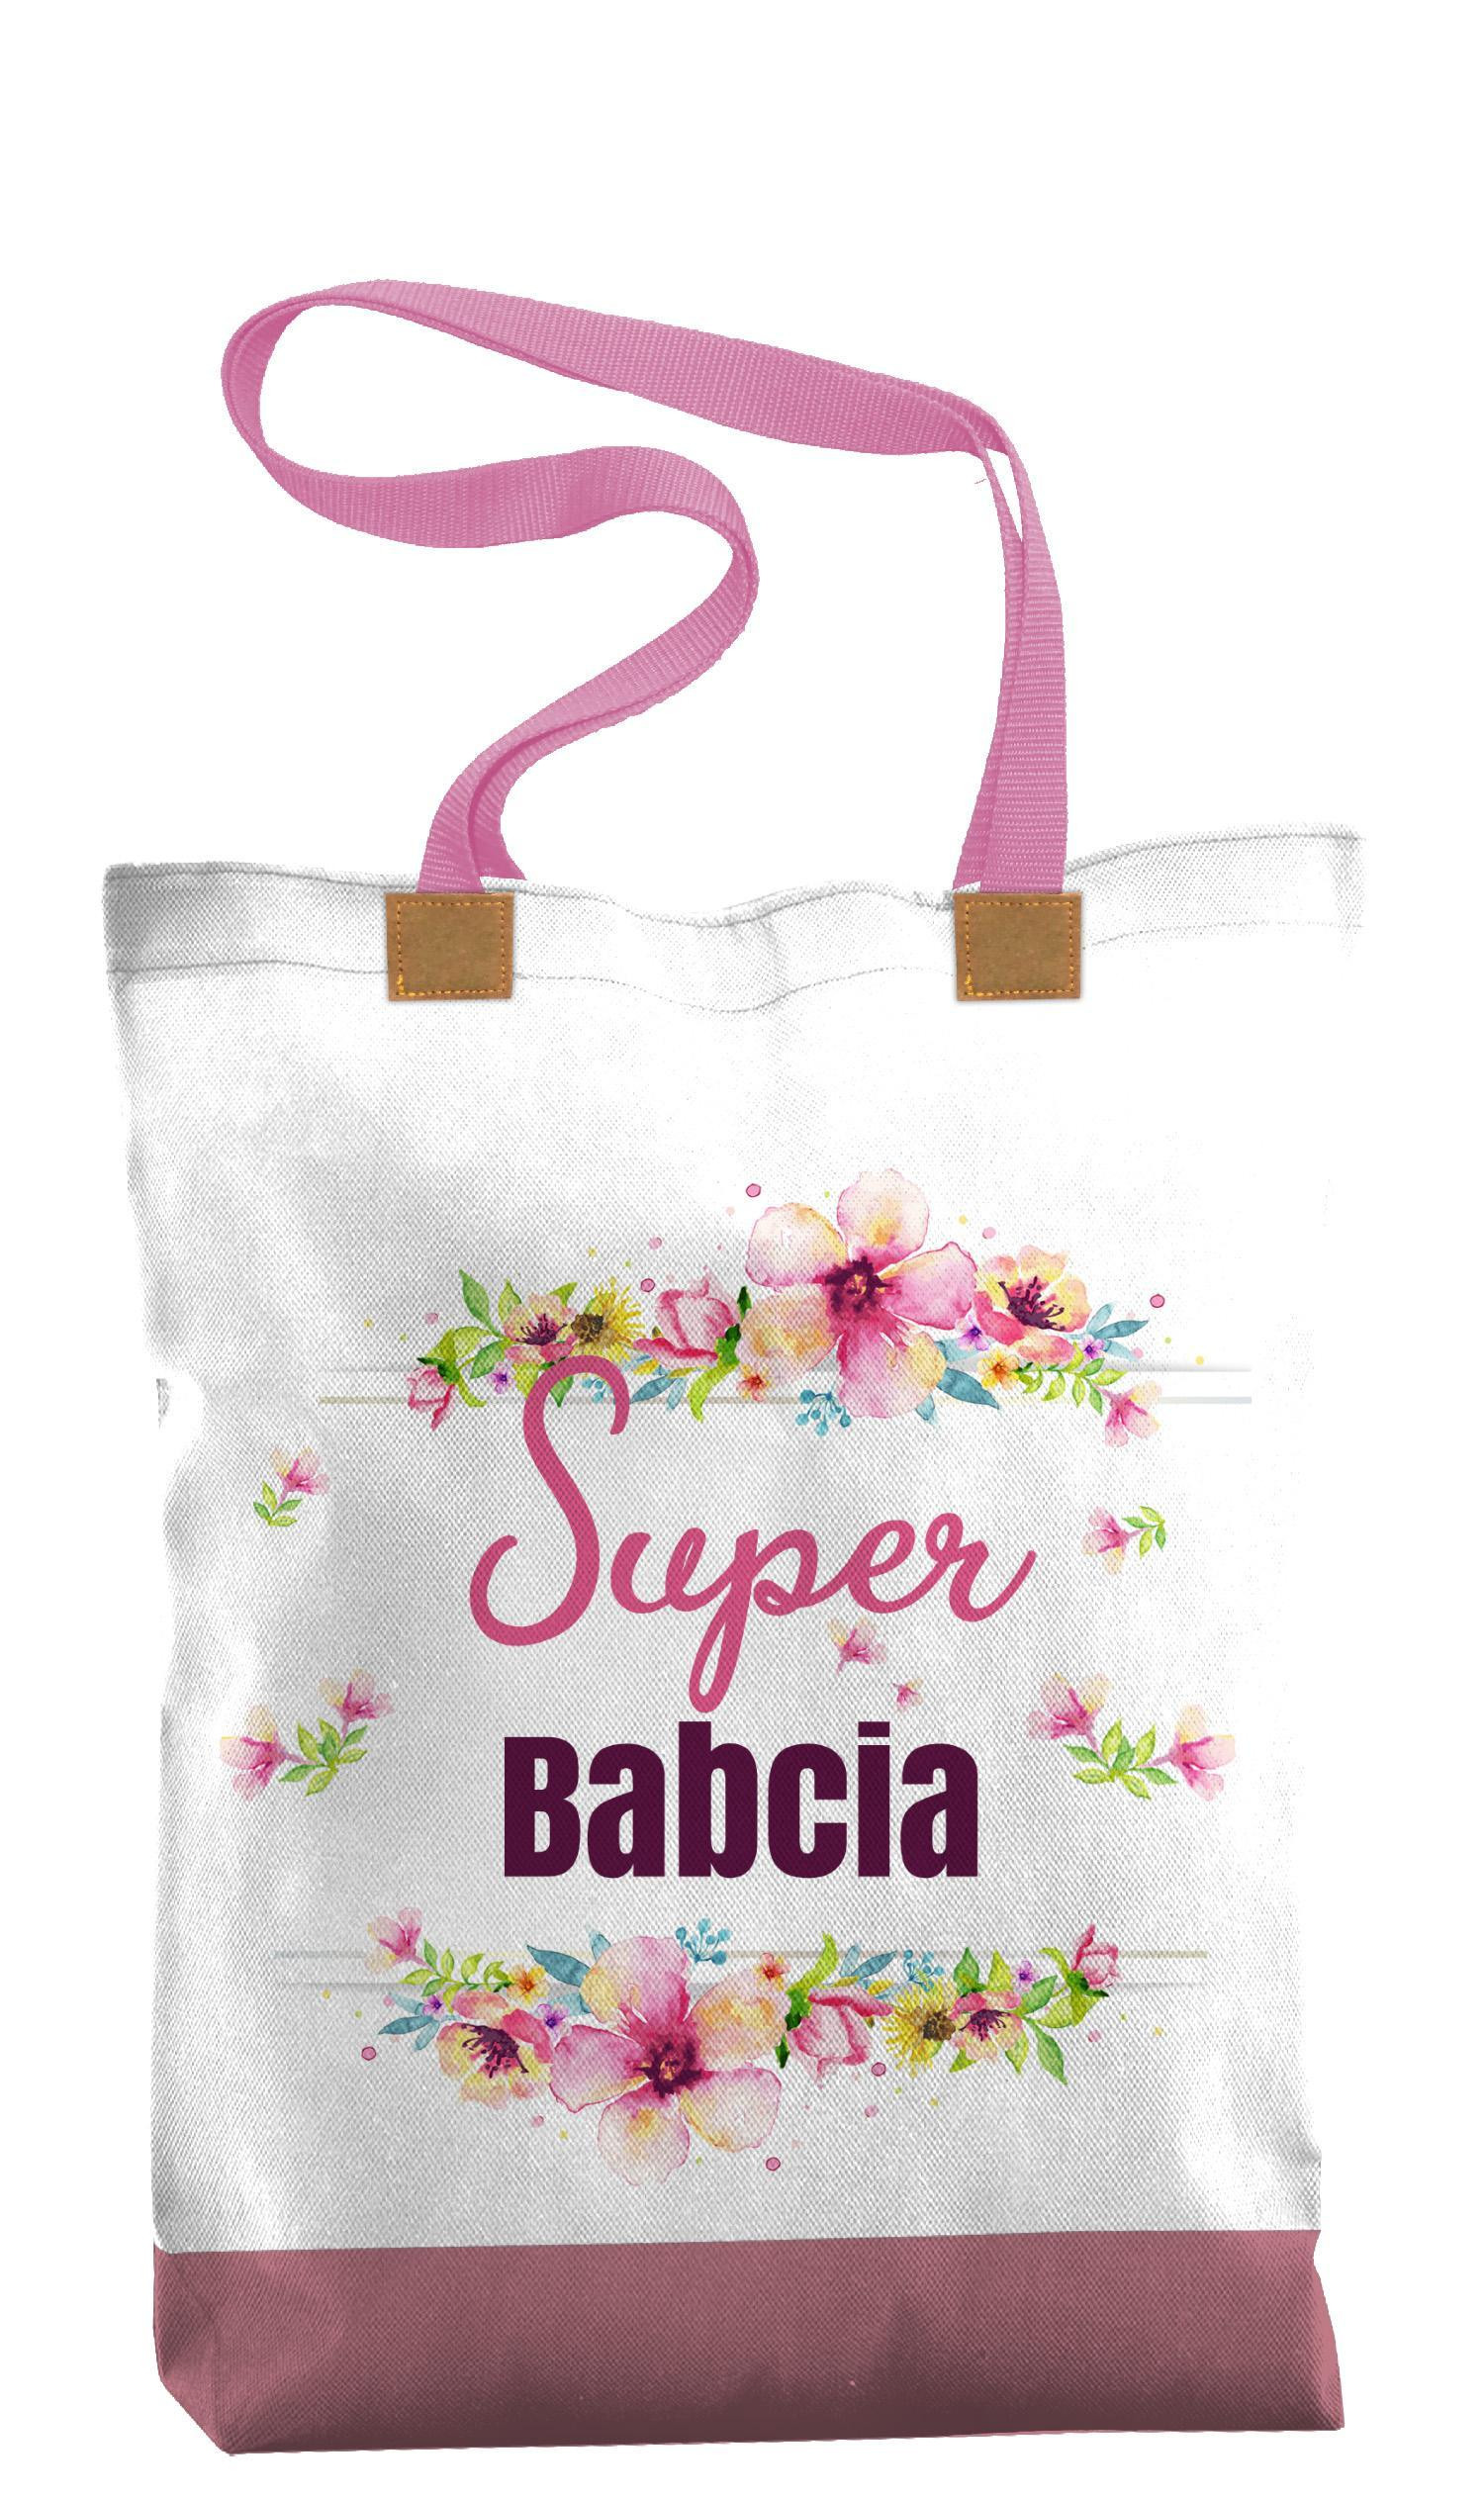 SHOPPER TASCHE - SUPER BABCIA / rosa - Nähset